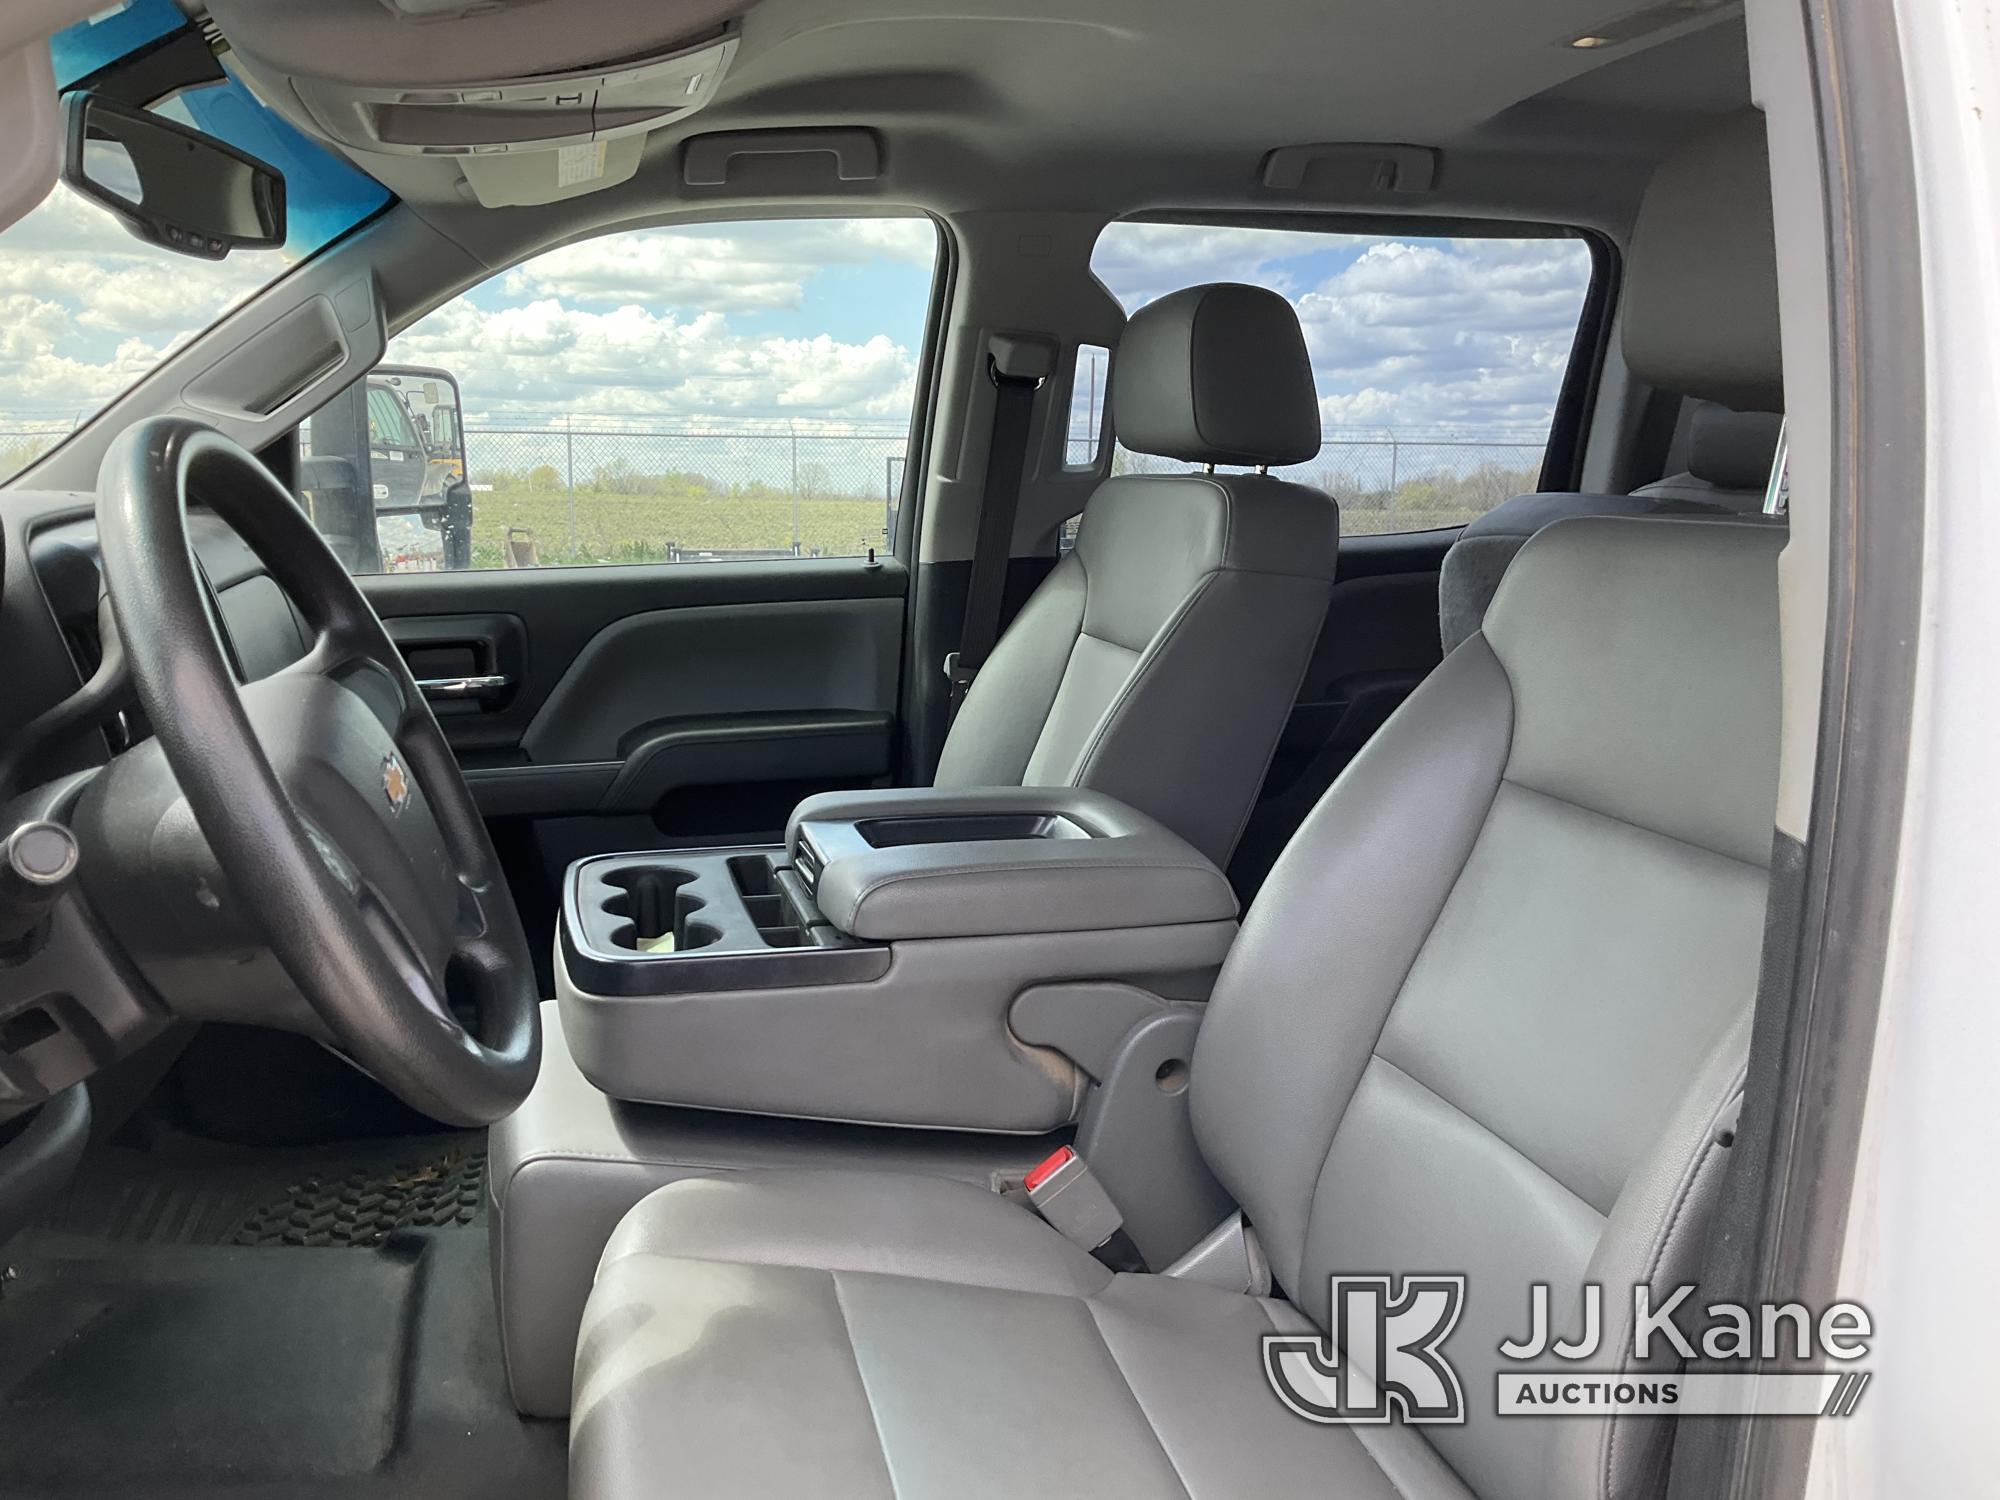 (Hawk Point, MO) 2019 Chevrolet Silverado 2500HD 4x4 Crew-Cab Pickup Truck Runs & Moves